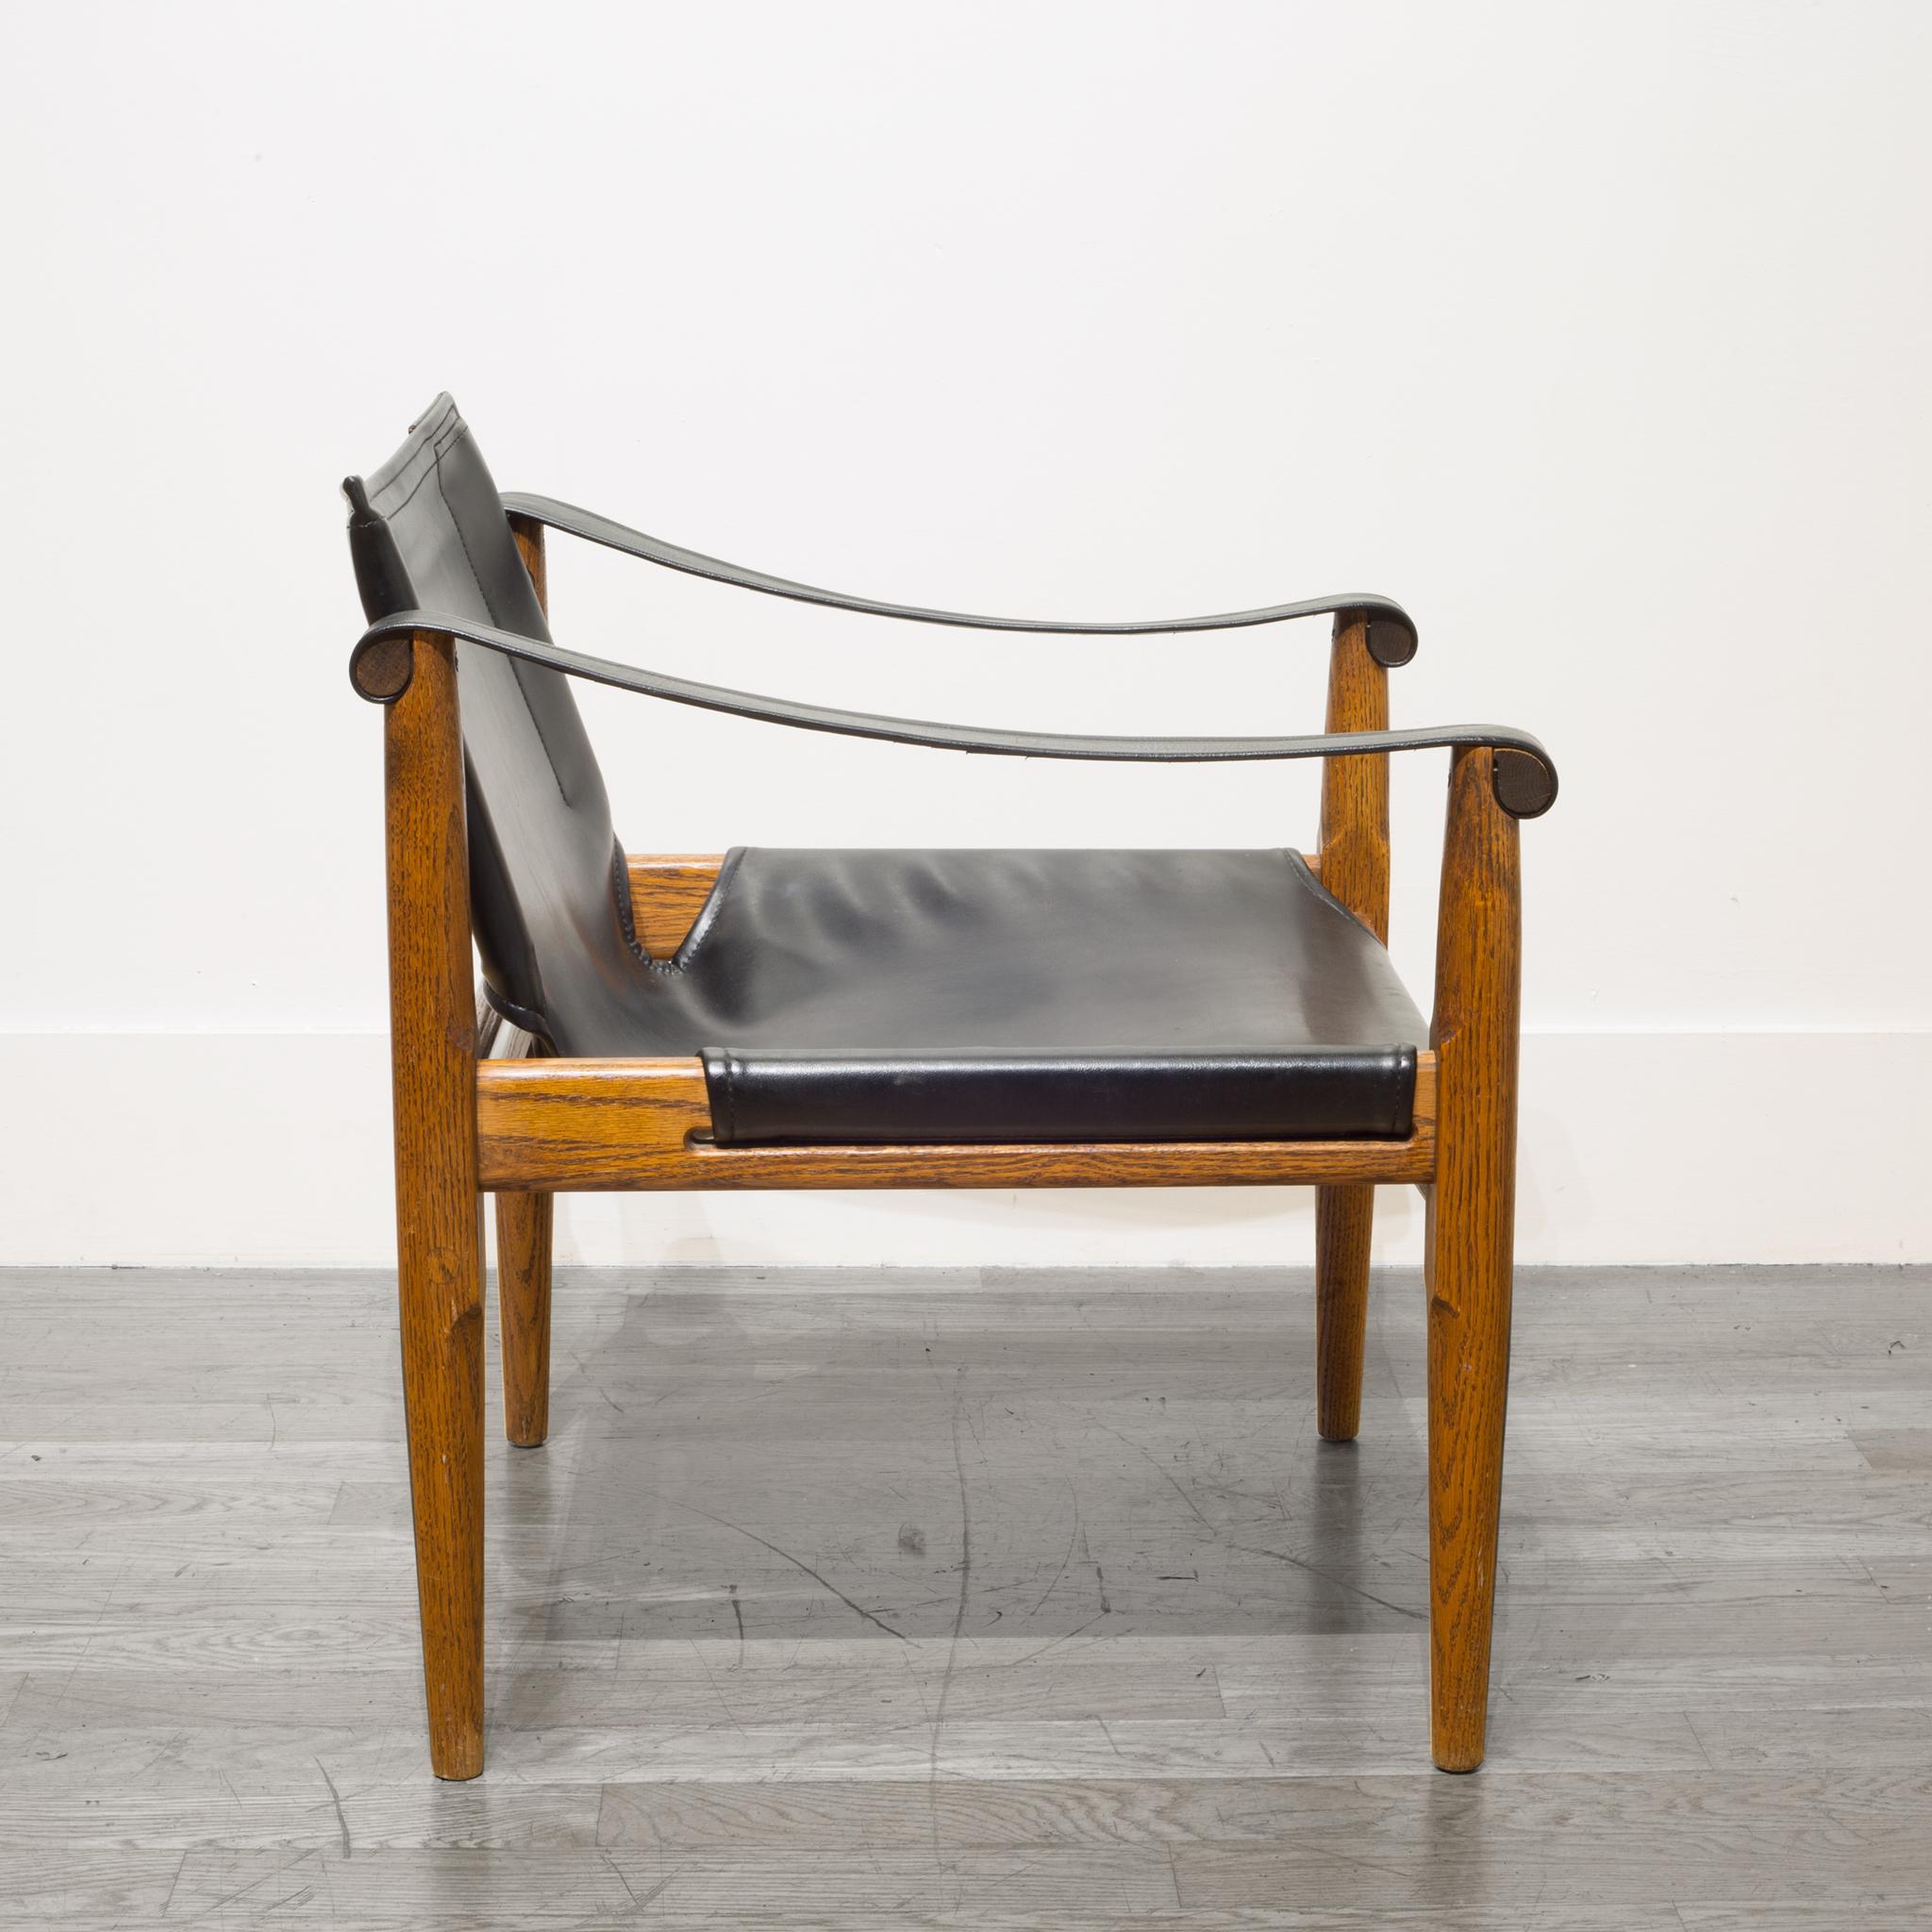 American Midcentury Douglas Heaslett for Brown Saltman Sling Chair, circa 1950